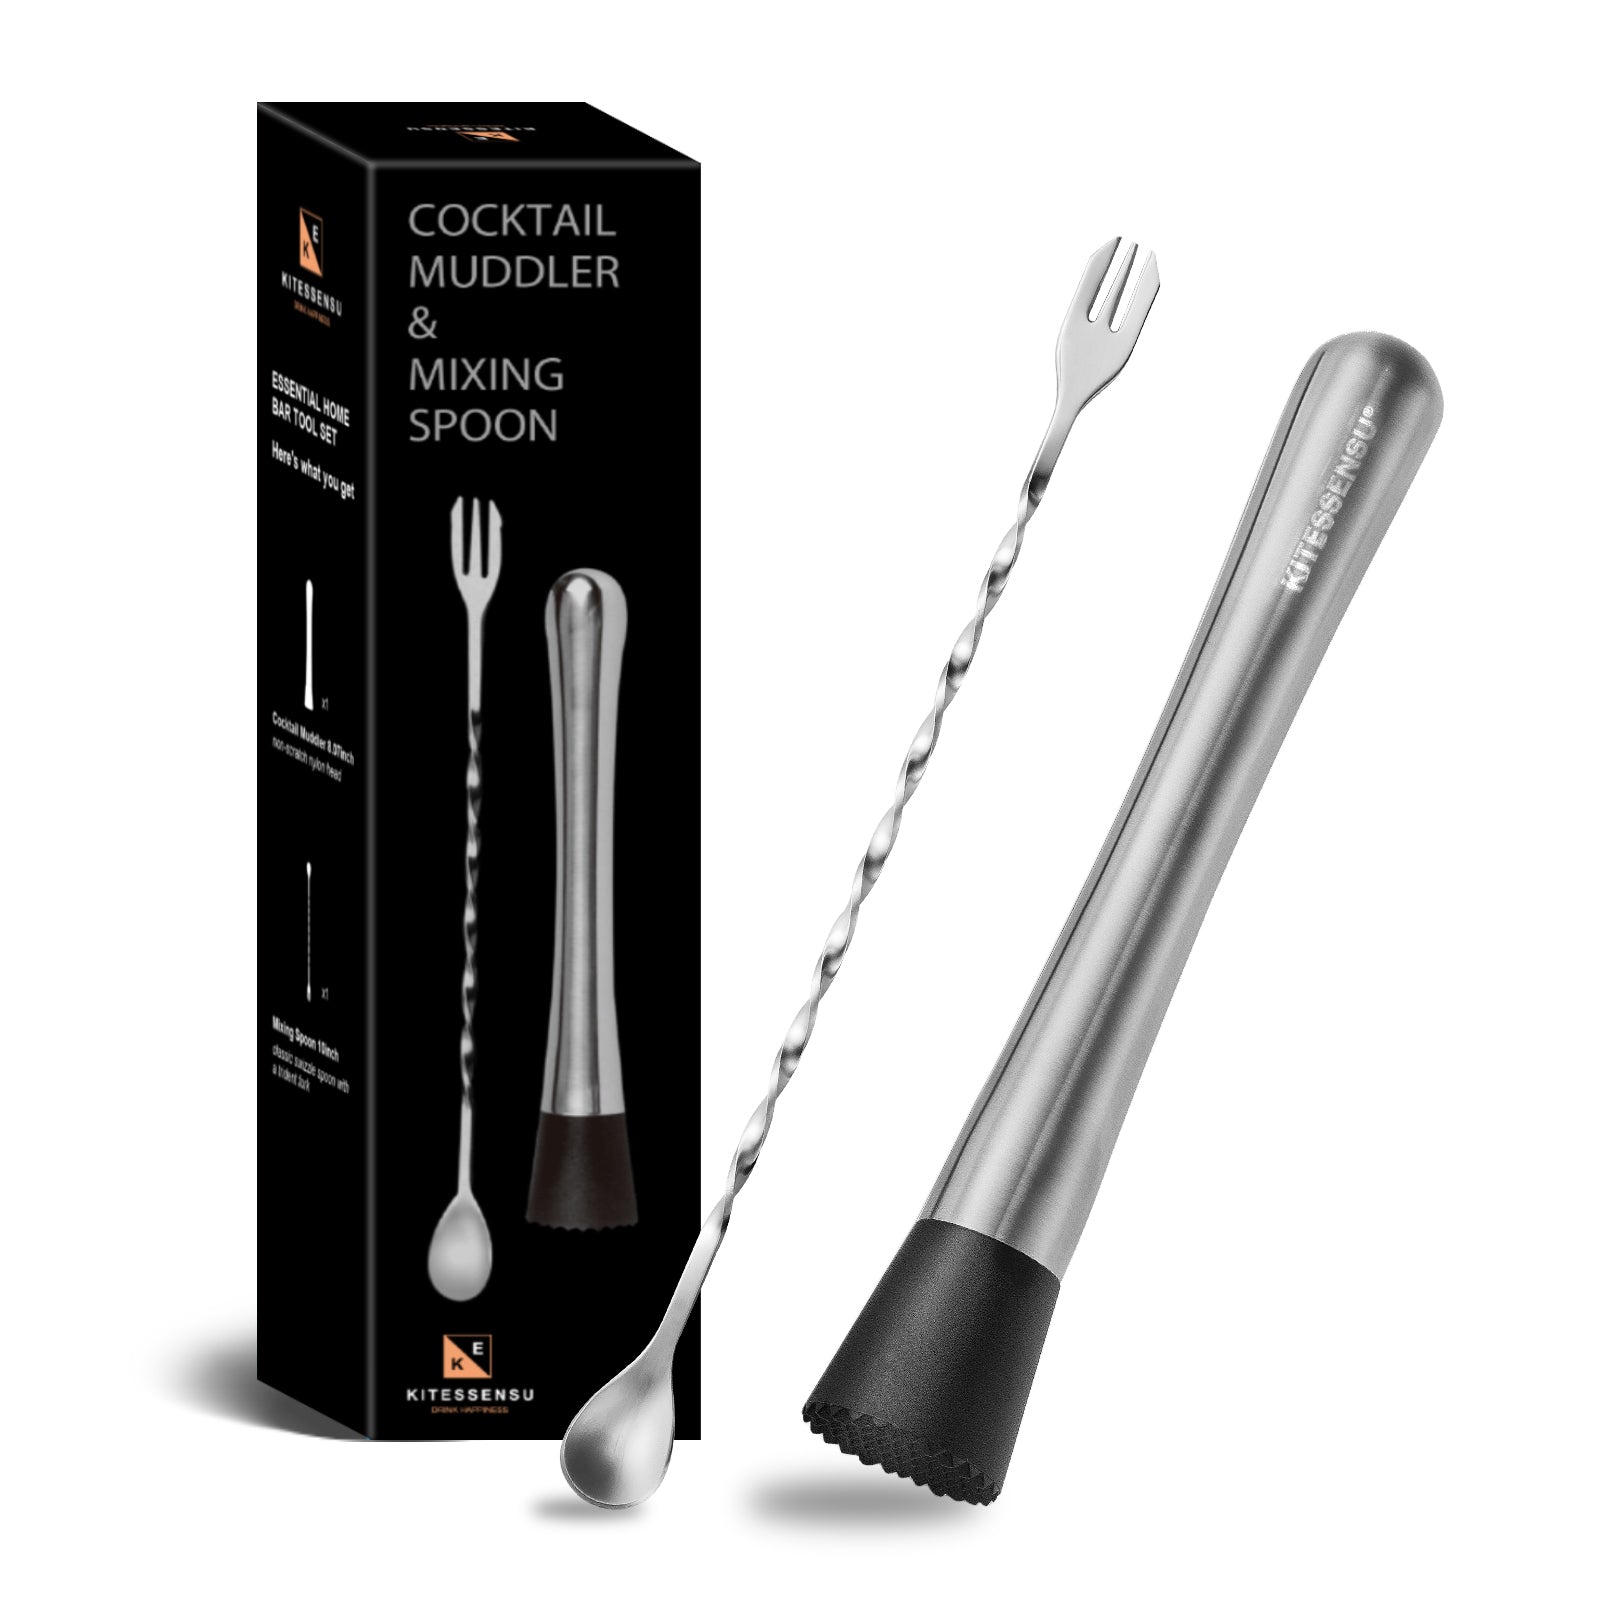 Stainless Steel Cocktail Muddler and Bar Spoon Tool Set | KITESSENSU